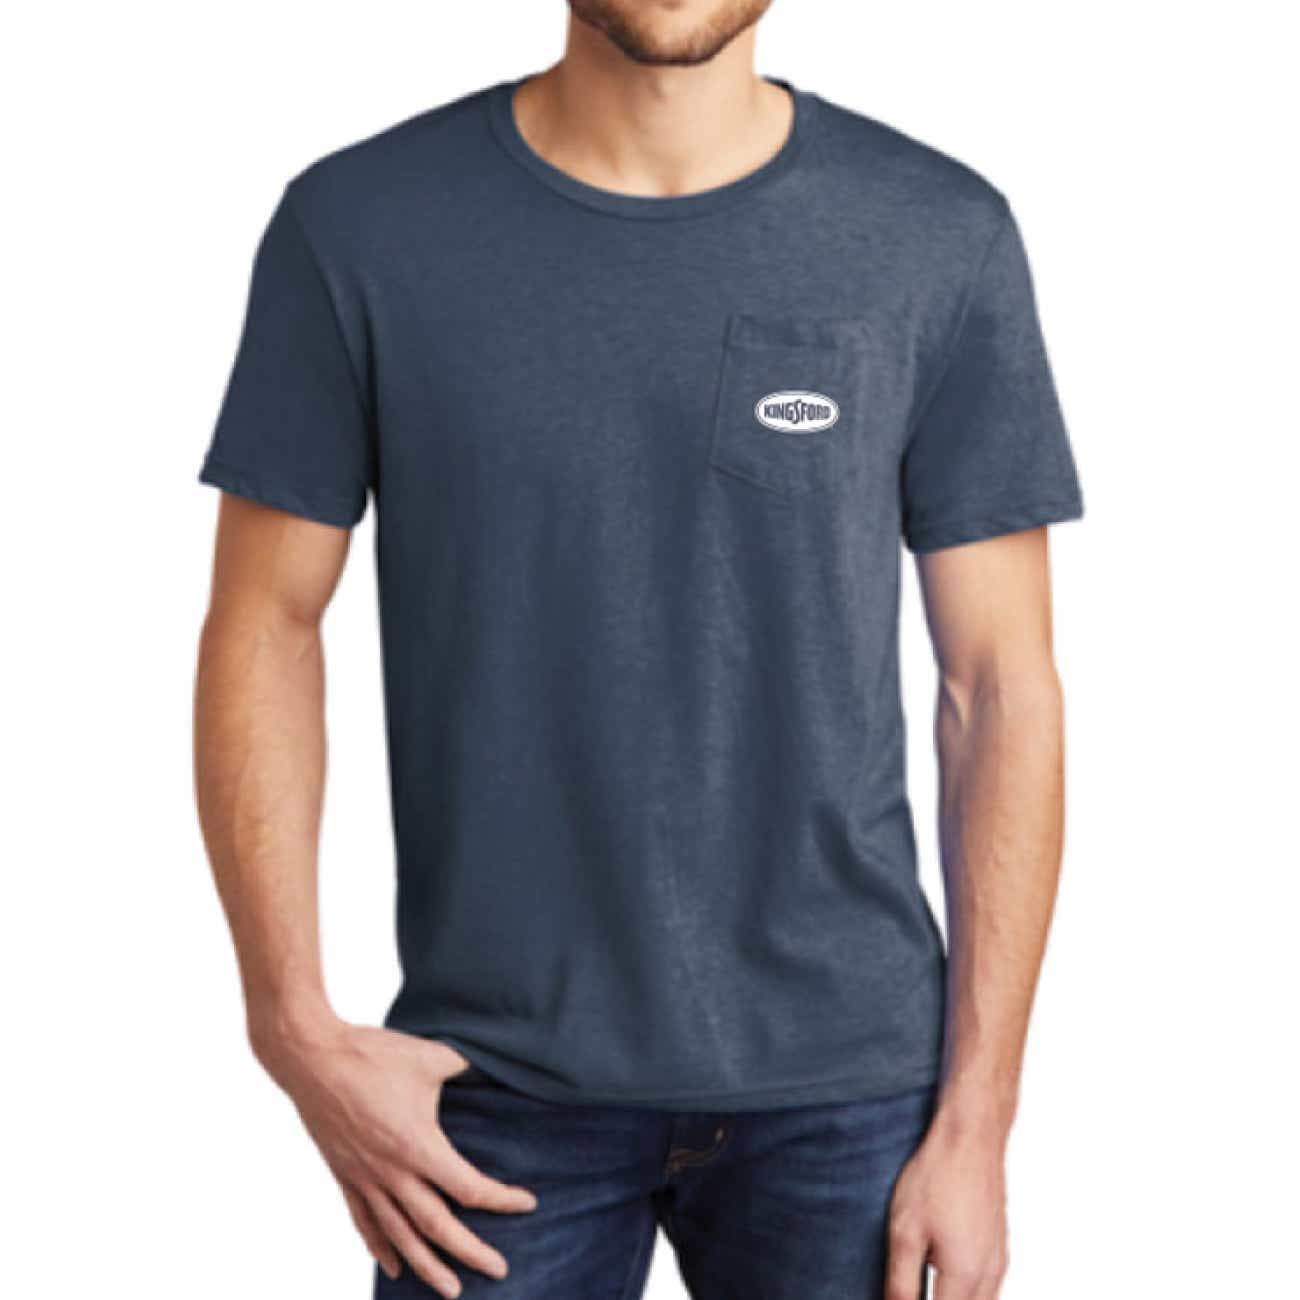 Kingsford Pocket T-Shirt (Navy)